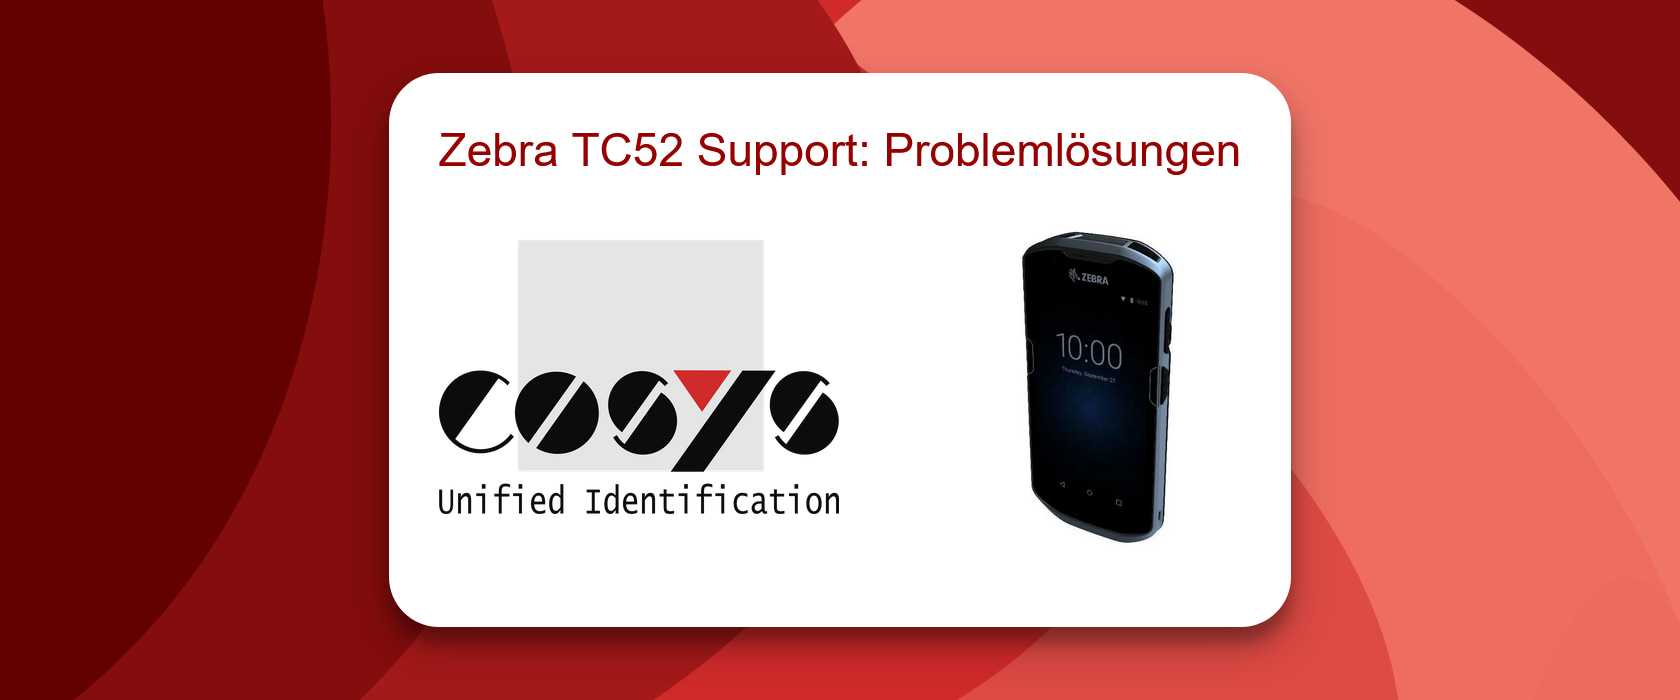 Zebra TC52 Support